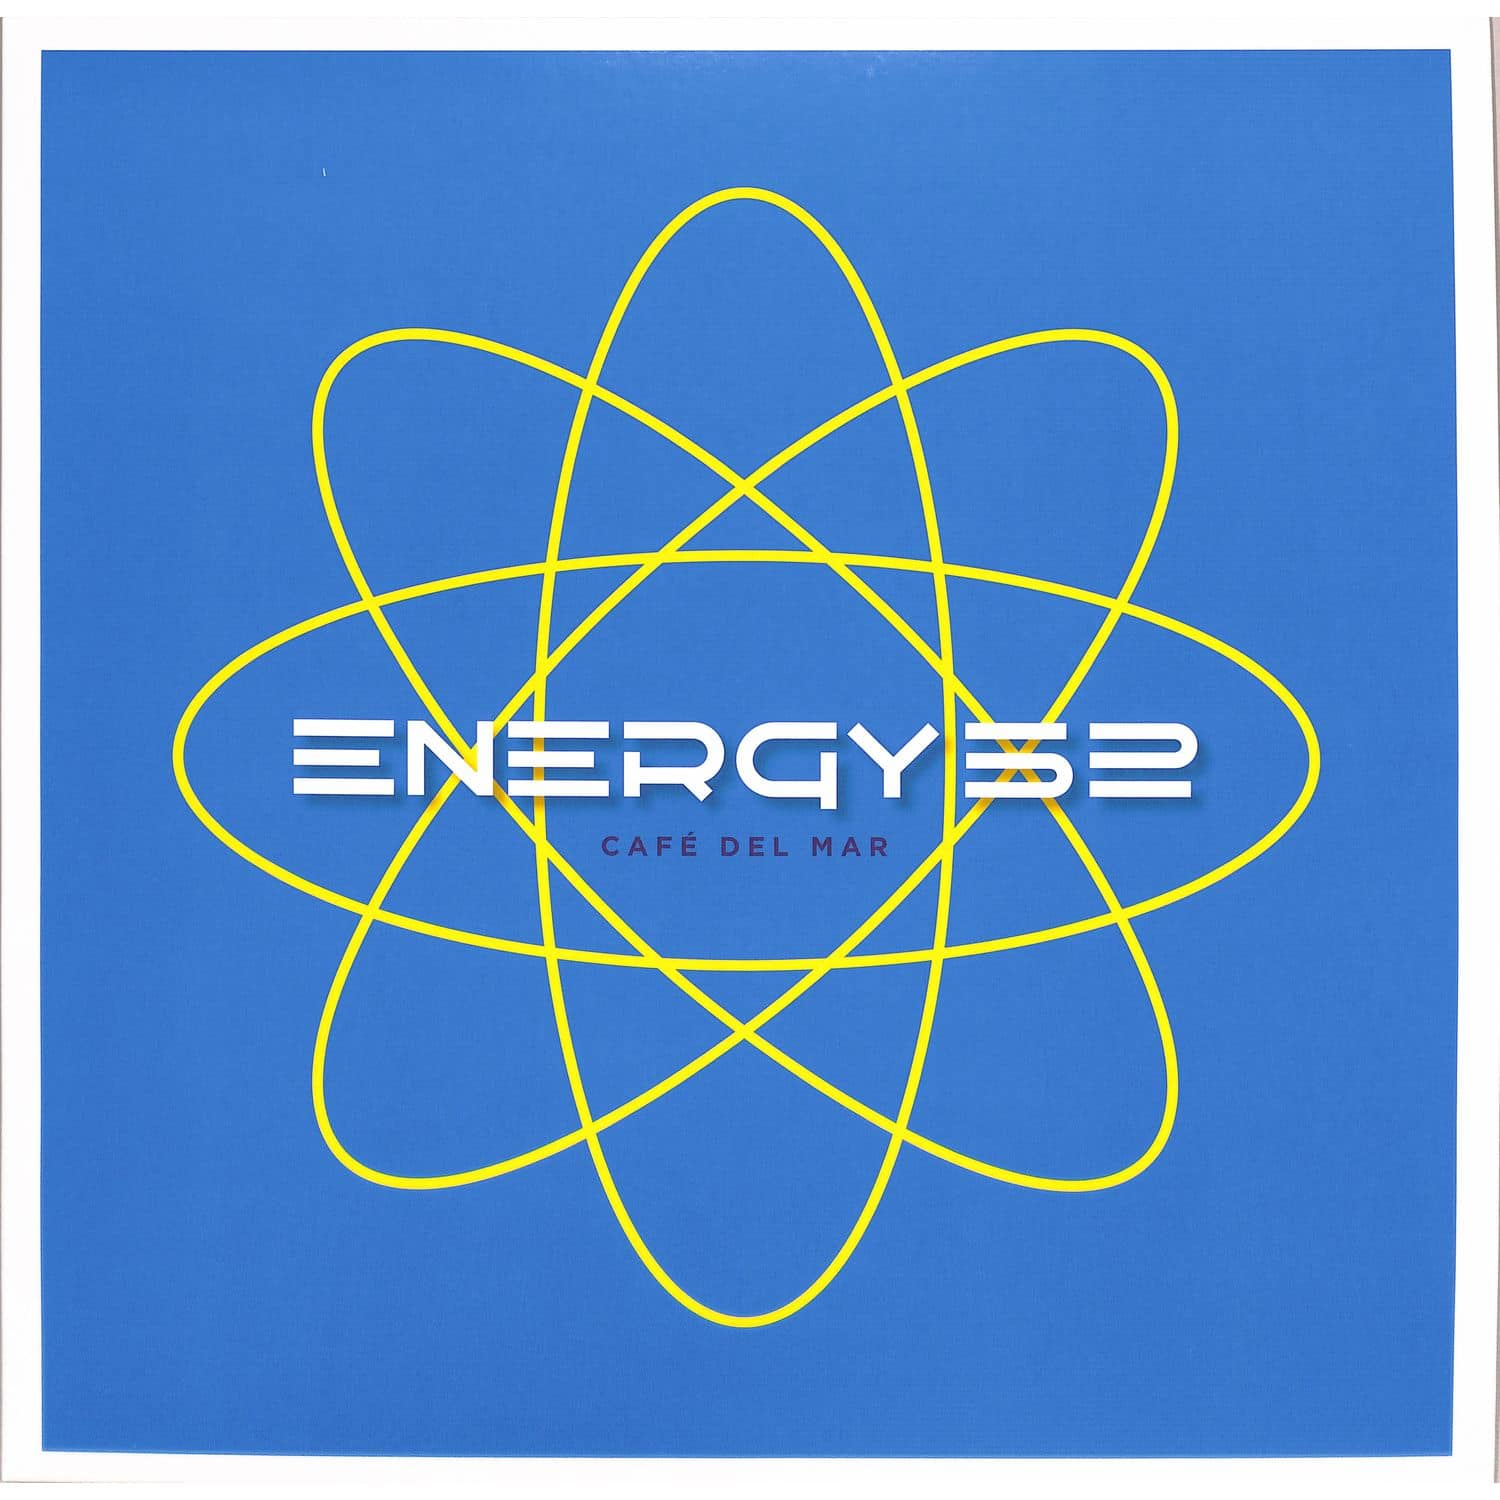 Energy 52 - CAFE DEL MAR 